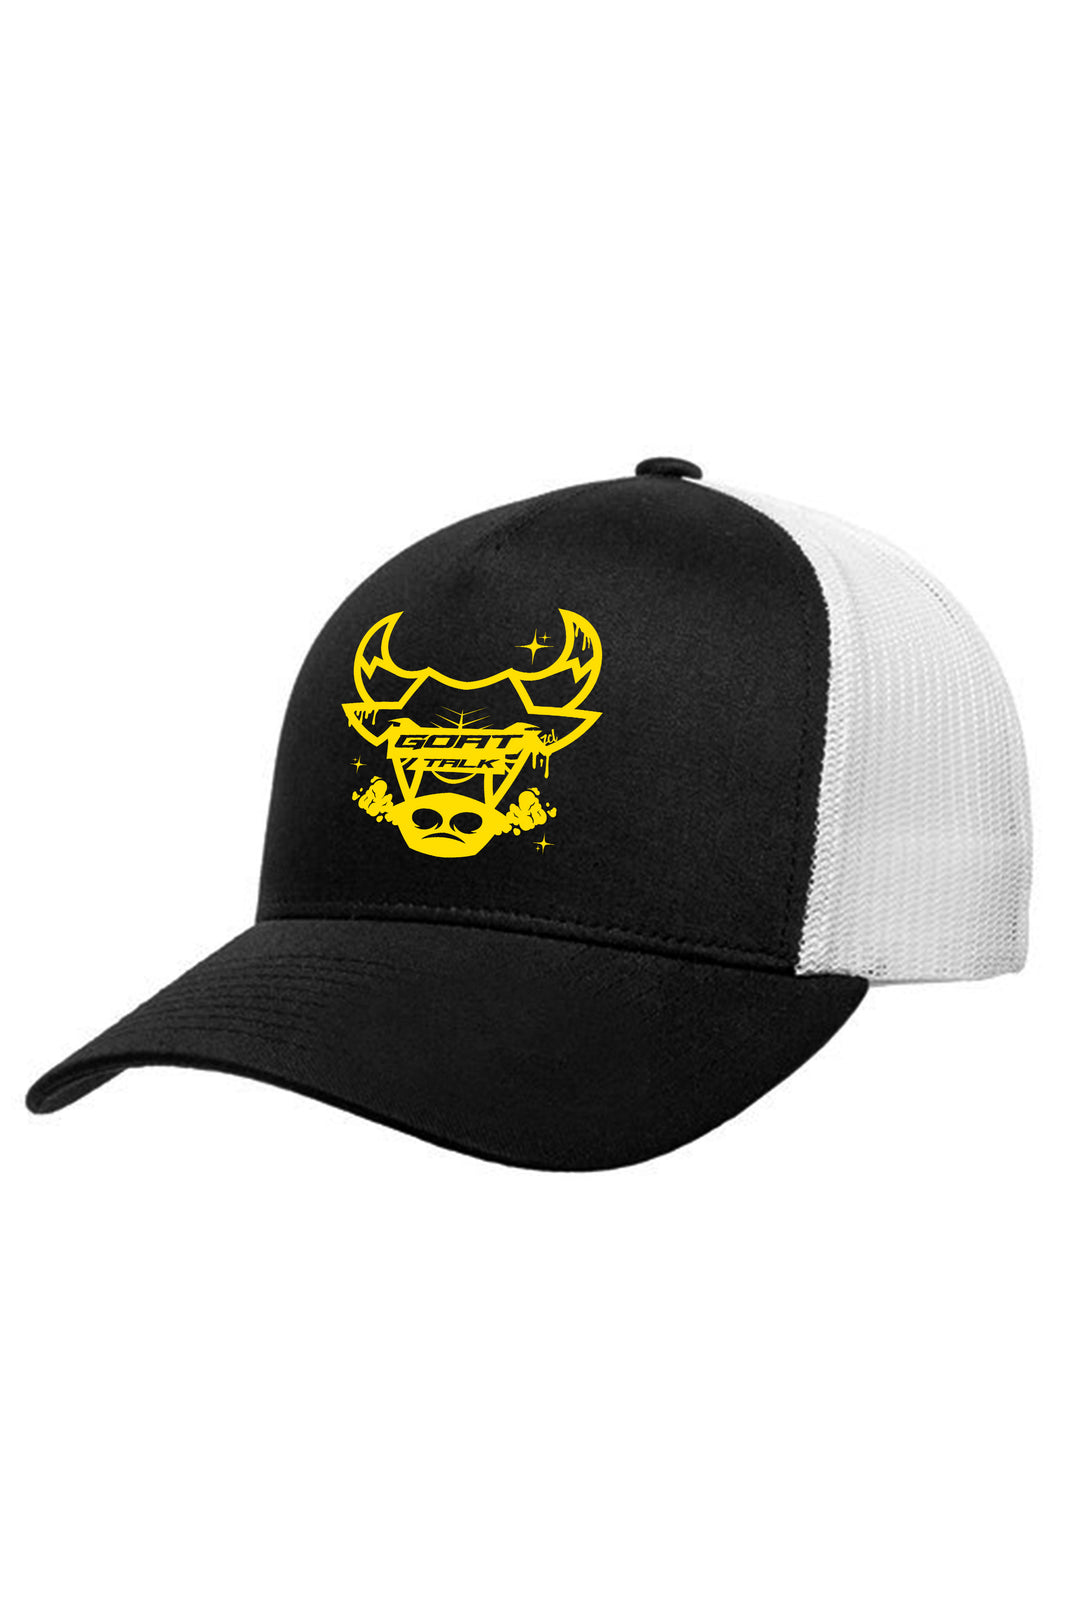 Goat Talk Retro Trucker Hat (Yellow Logo) - Zamage